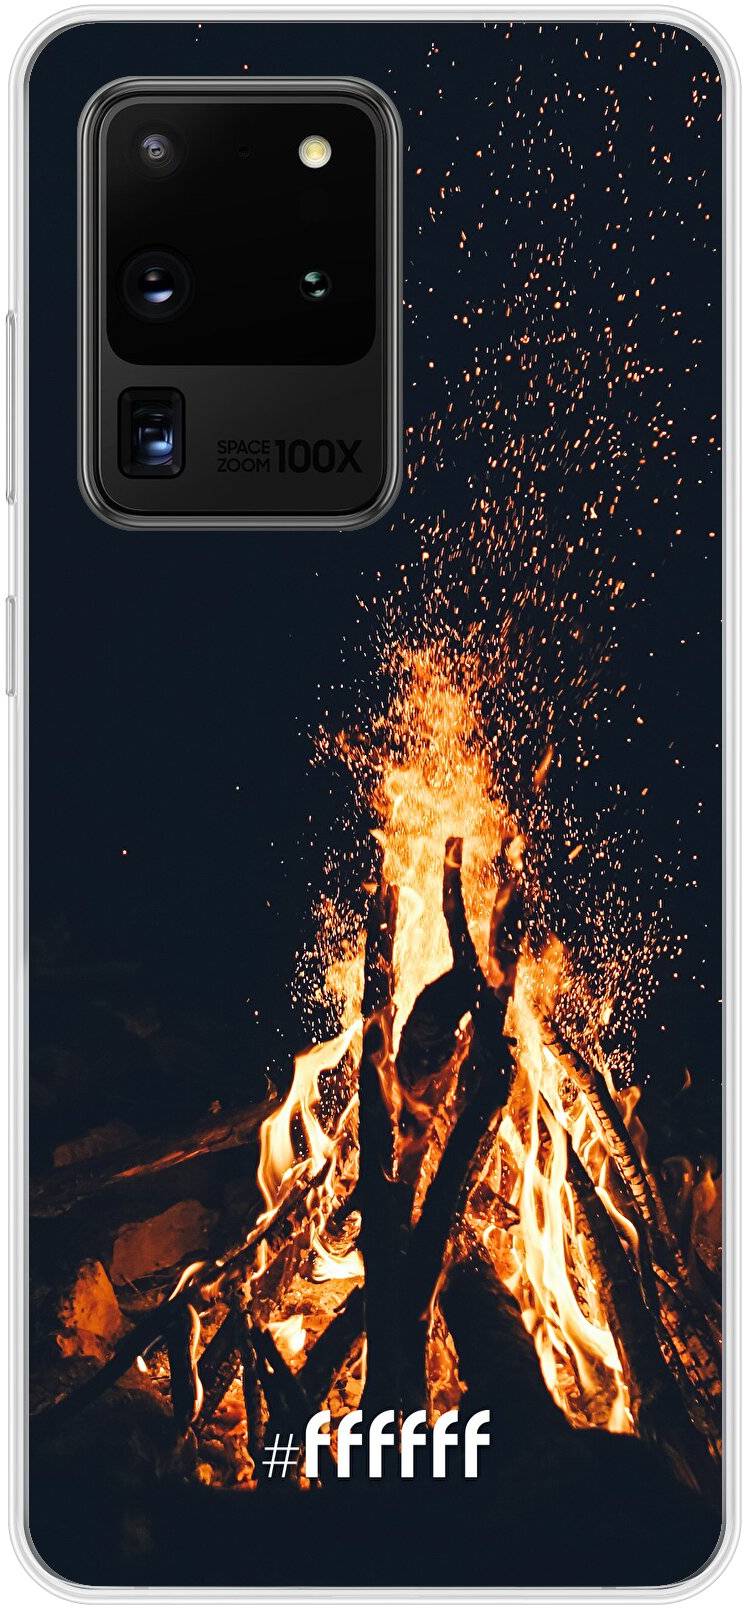 Bonfire Galaxy S20 Ultra